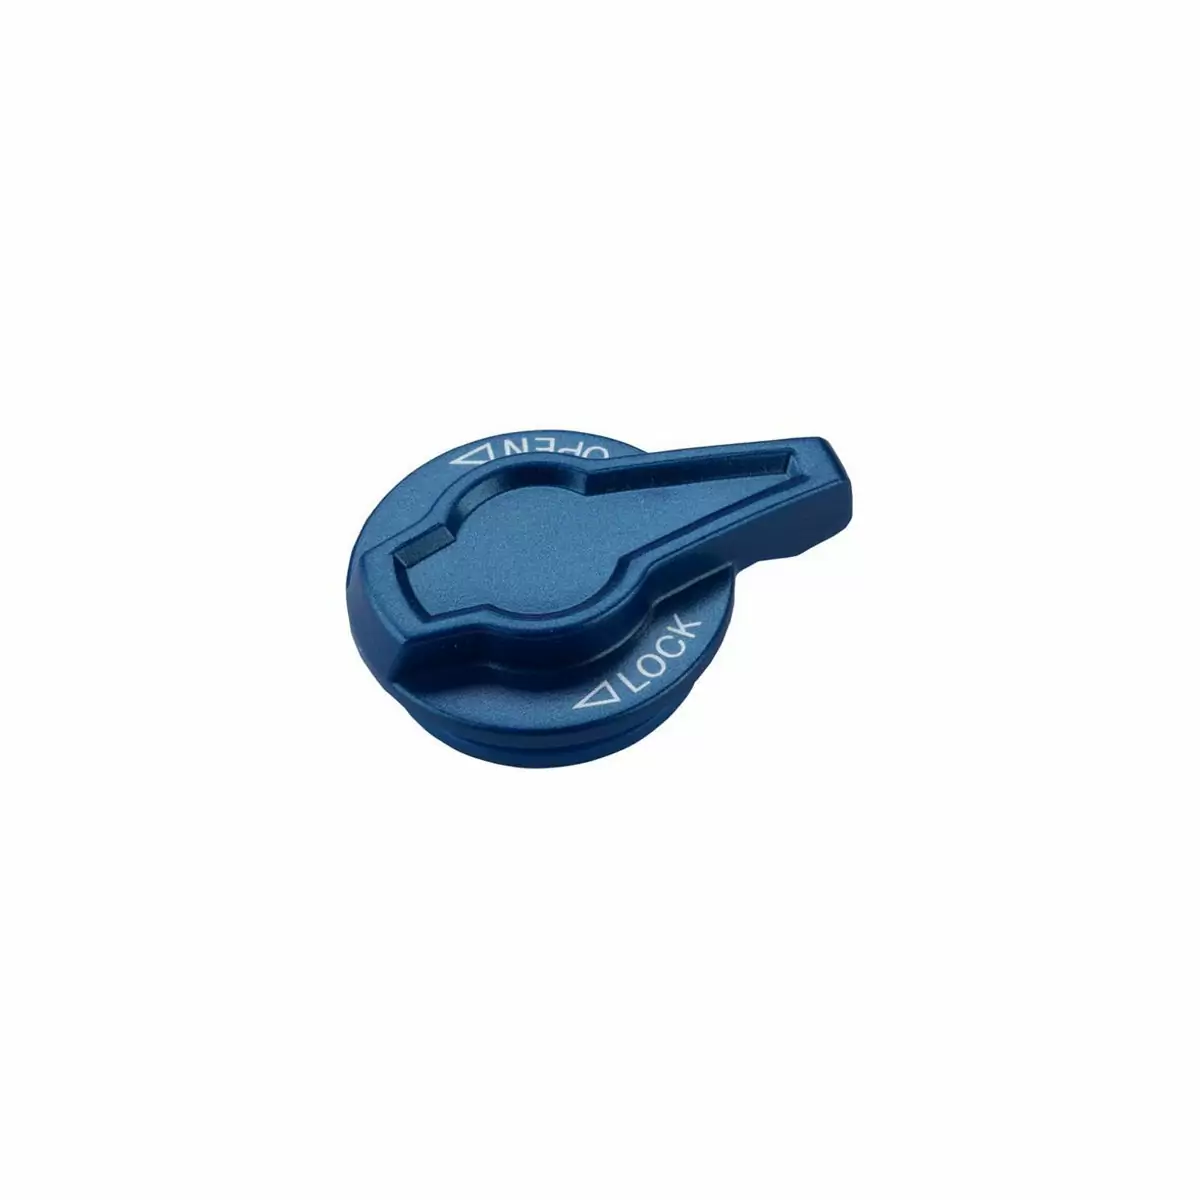 blaue Schwenkkappe für die Patrone zu SF15-XCR-LO/SF16-Raidon XC-LO - image